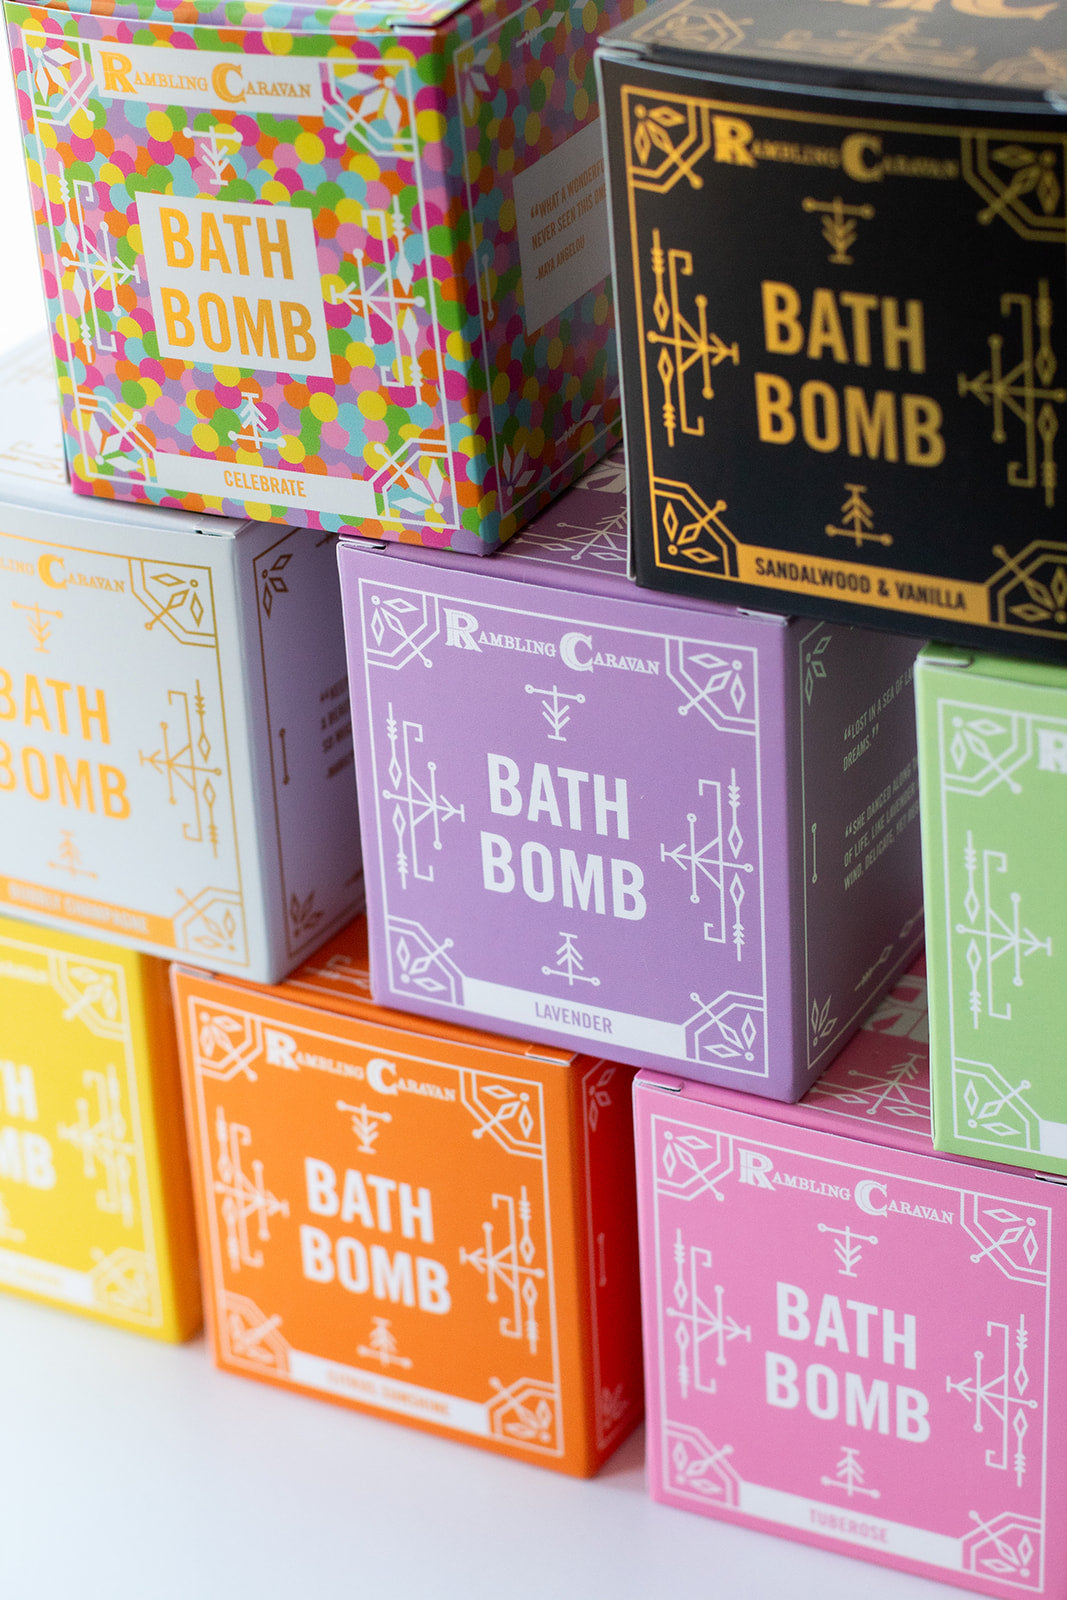 Bath Bomb - Tuberose